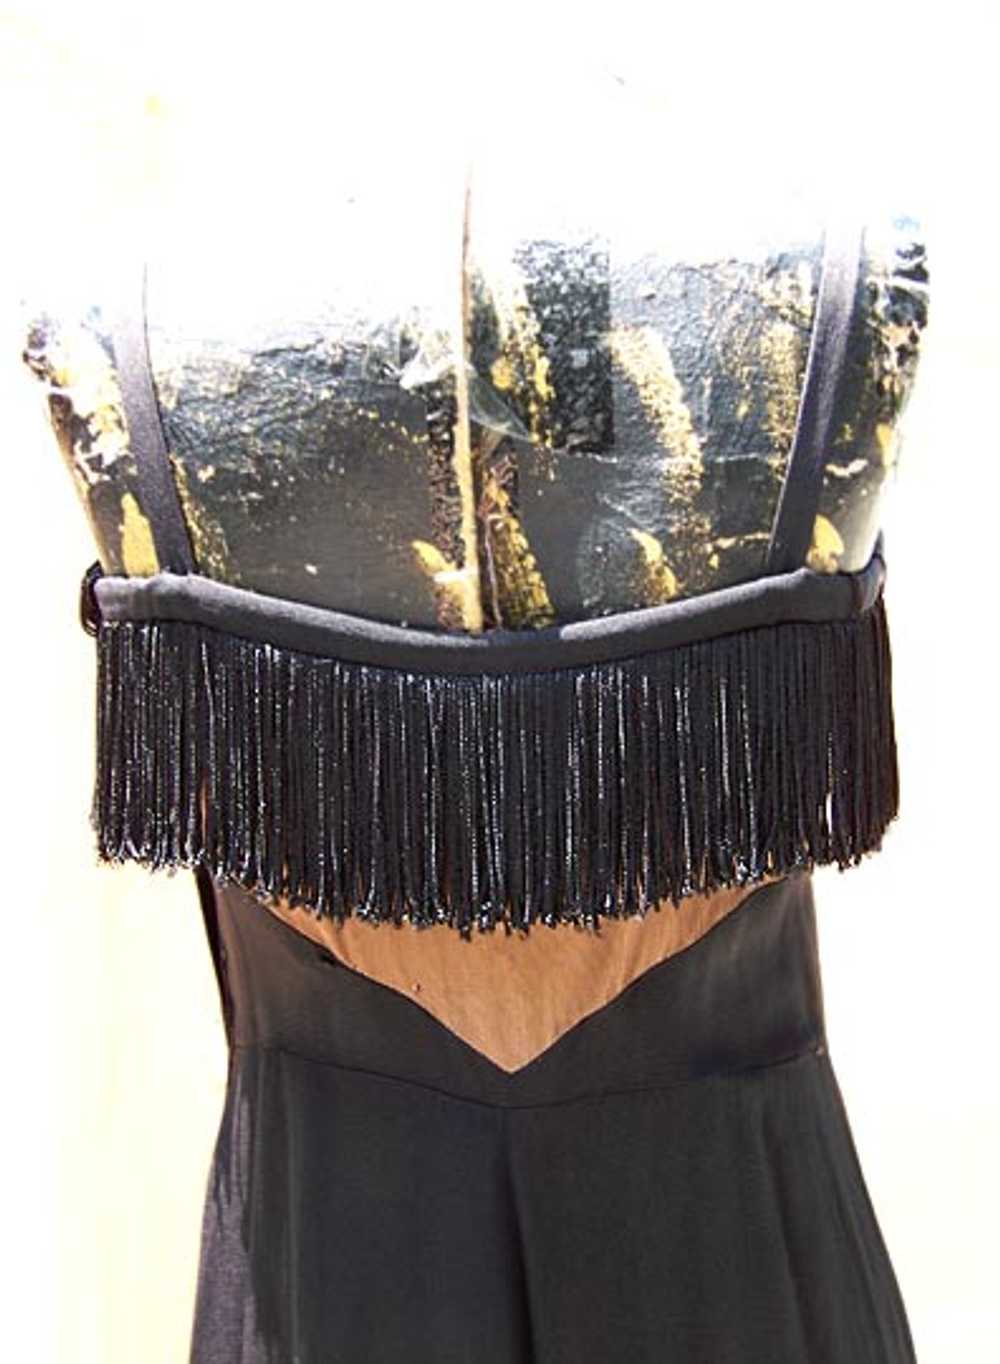 Fringe & net gown - image 3